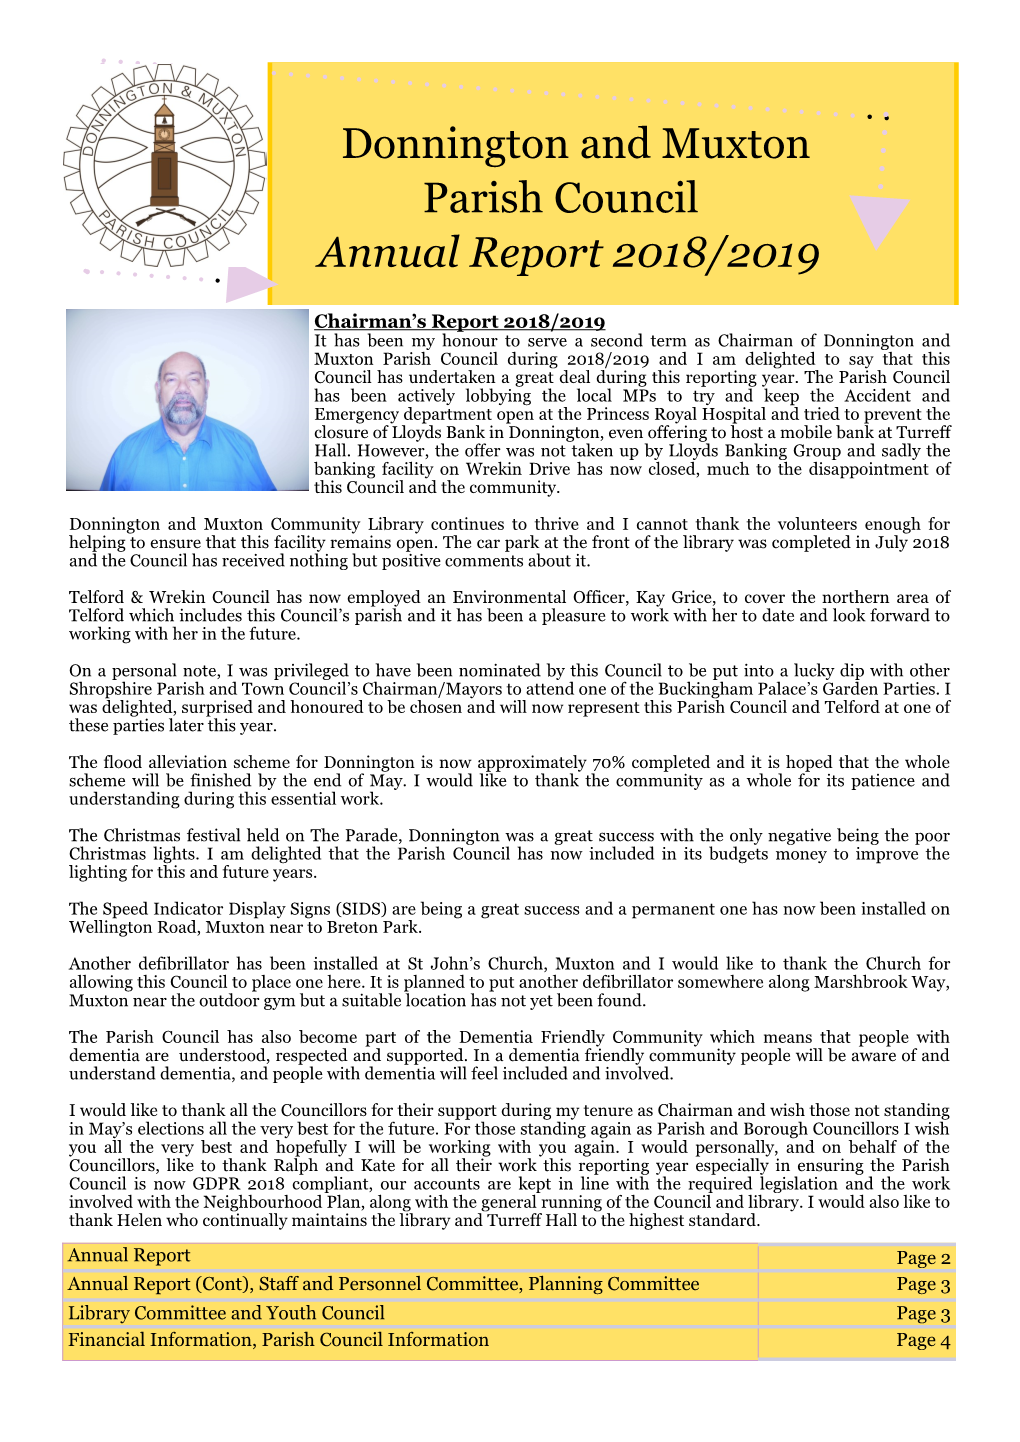 Donnington and Muxton Parish Council Annual Report 2018/2019